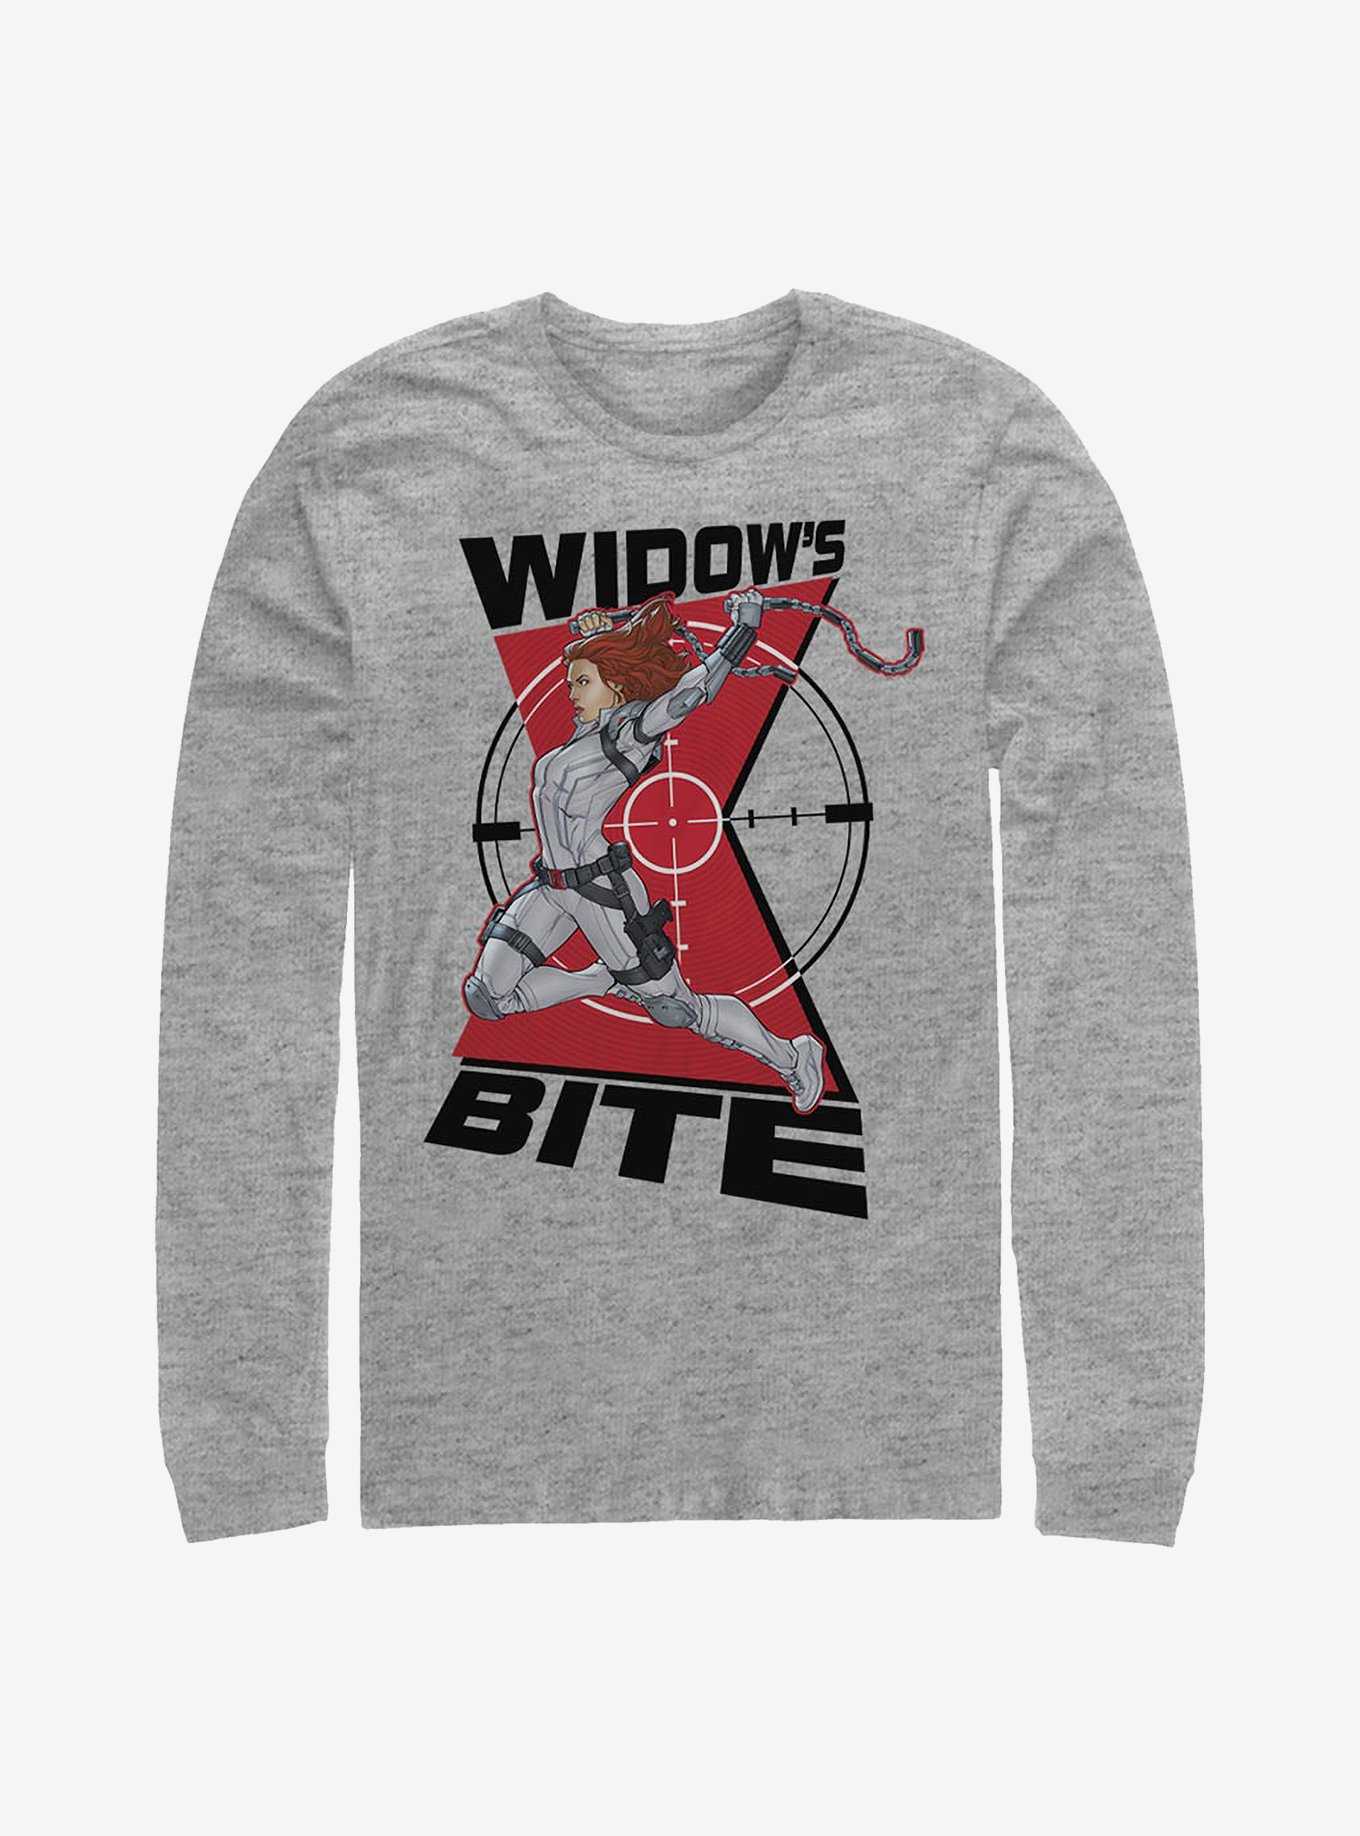 Marvel Black Widow Widow Bite Long-Sleeve T-Shirt, , hi-res